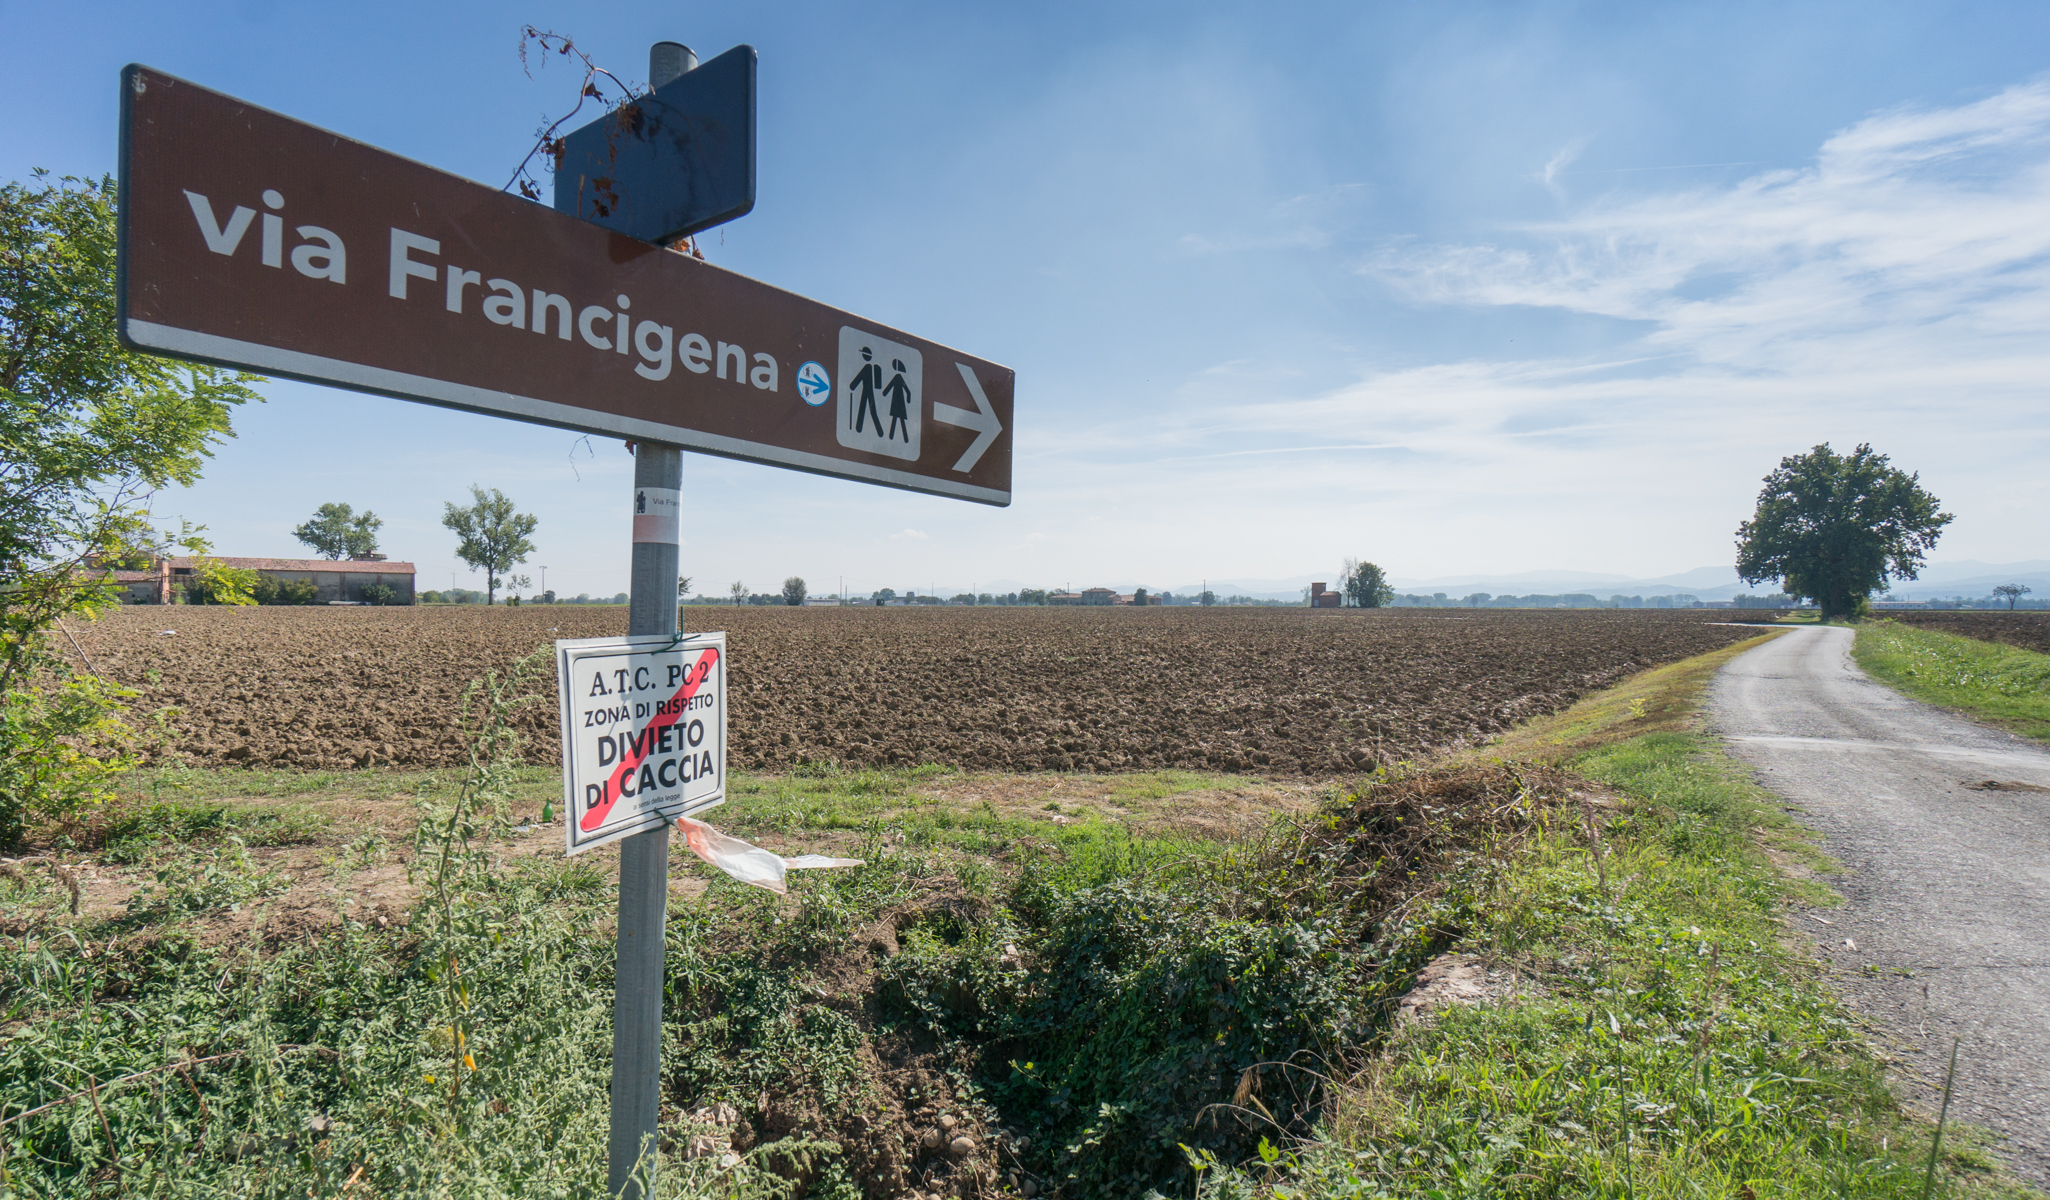 The Via Francigena approximately 4.8 km (3 miles) before reaching Chero, Italy | Photo by Mike Hudak